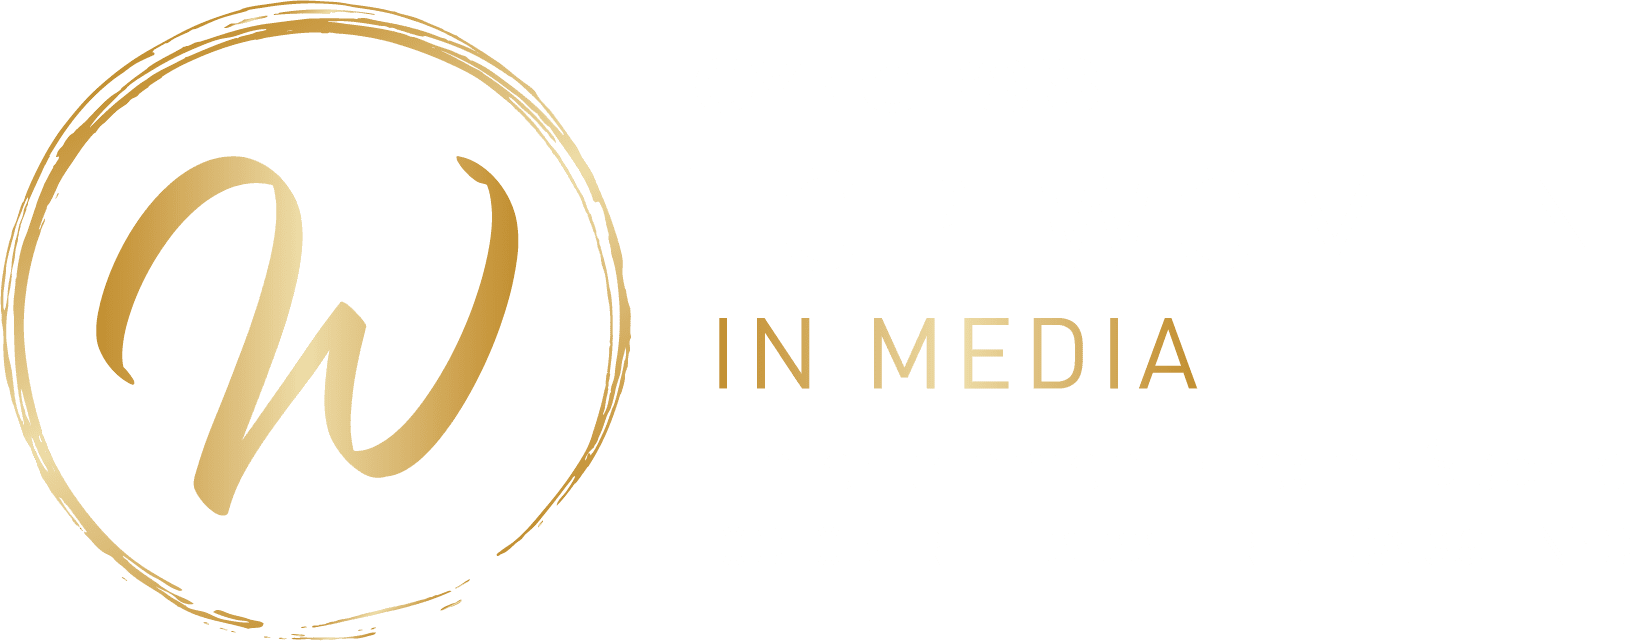 Cynopsis 2022 Top Women in Media